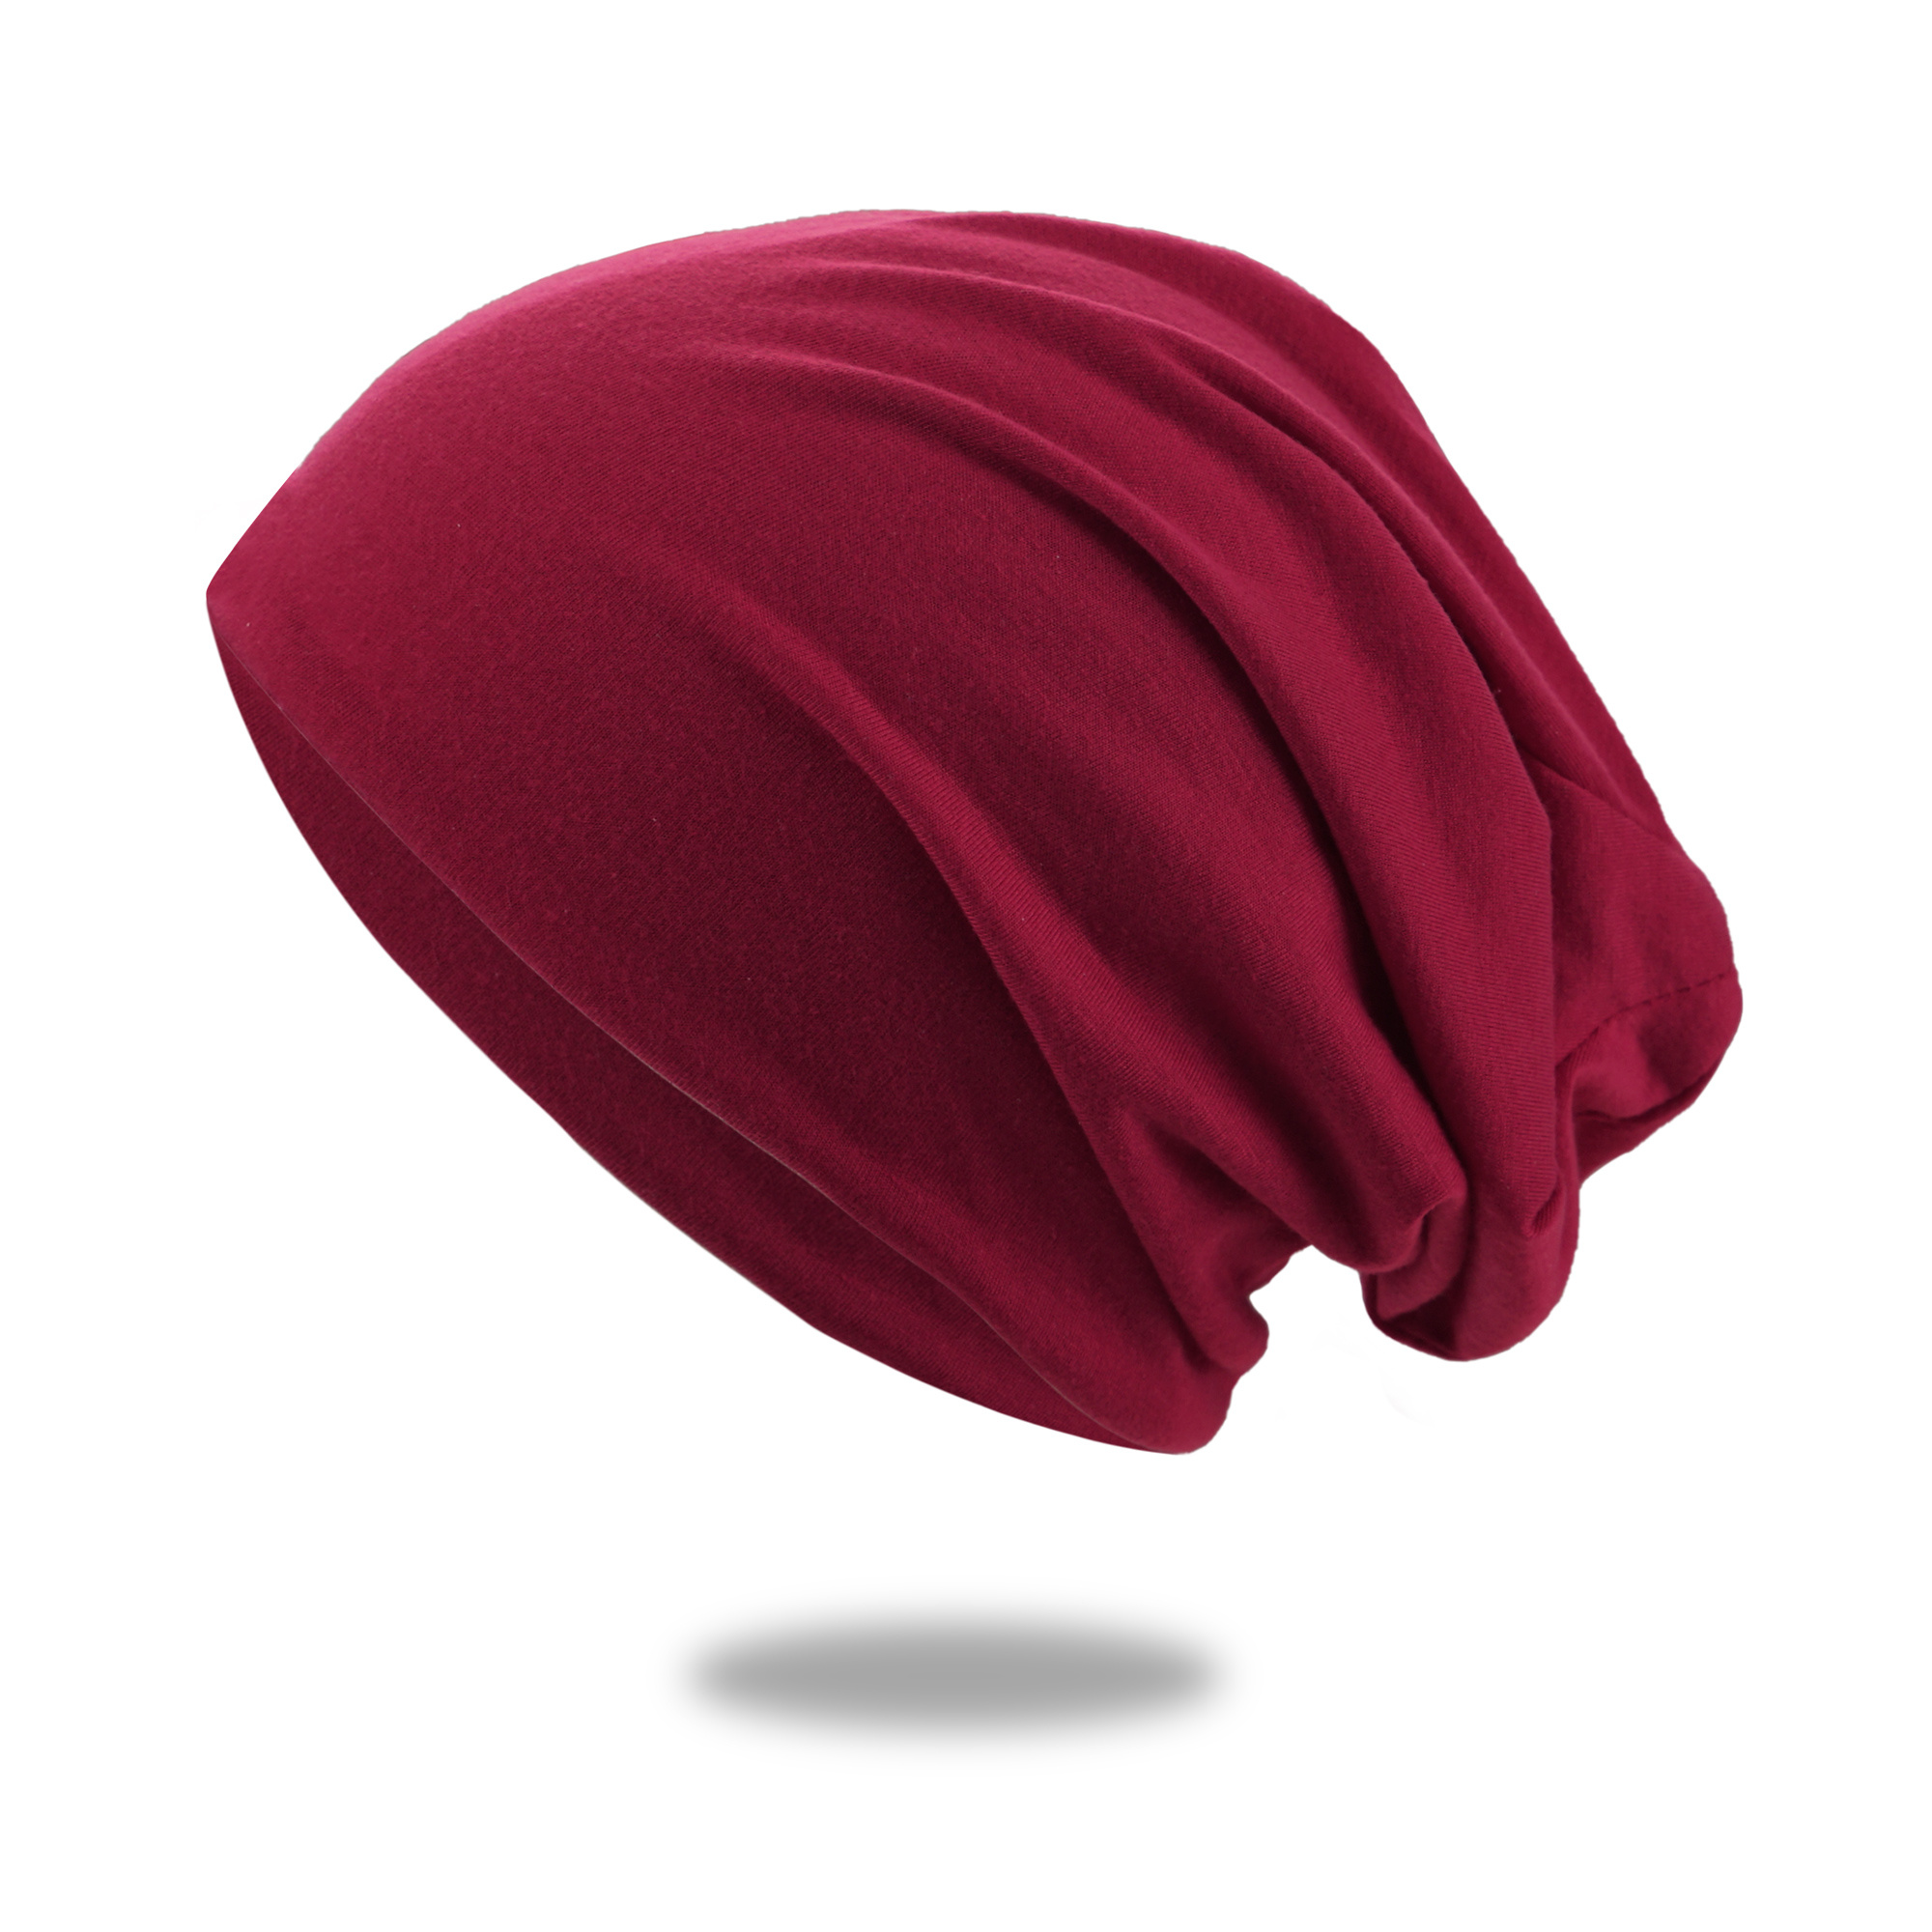 Syhood 18 Pieces Thin Knit Slouchy Cap Hip-hop Sleep Cap Stretchy Baggy Beanie Hat Dwarf Hat for Women Men, 18 Colors